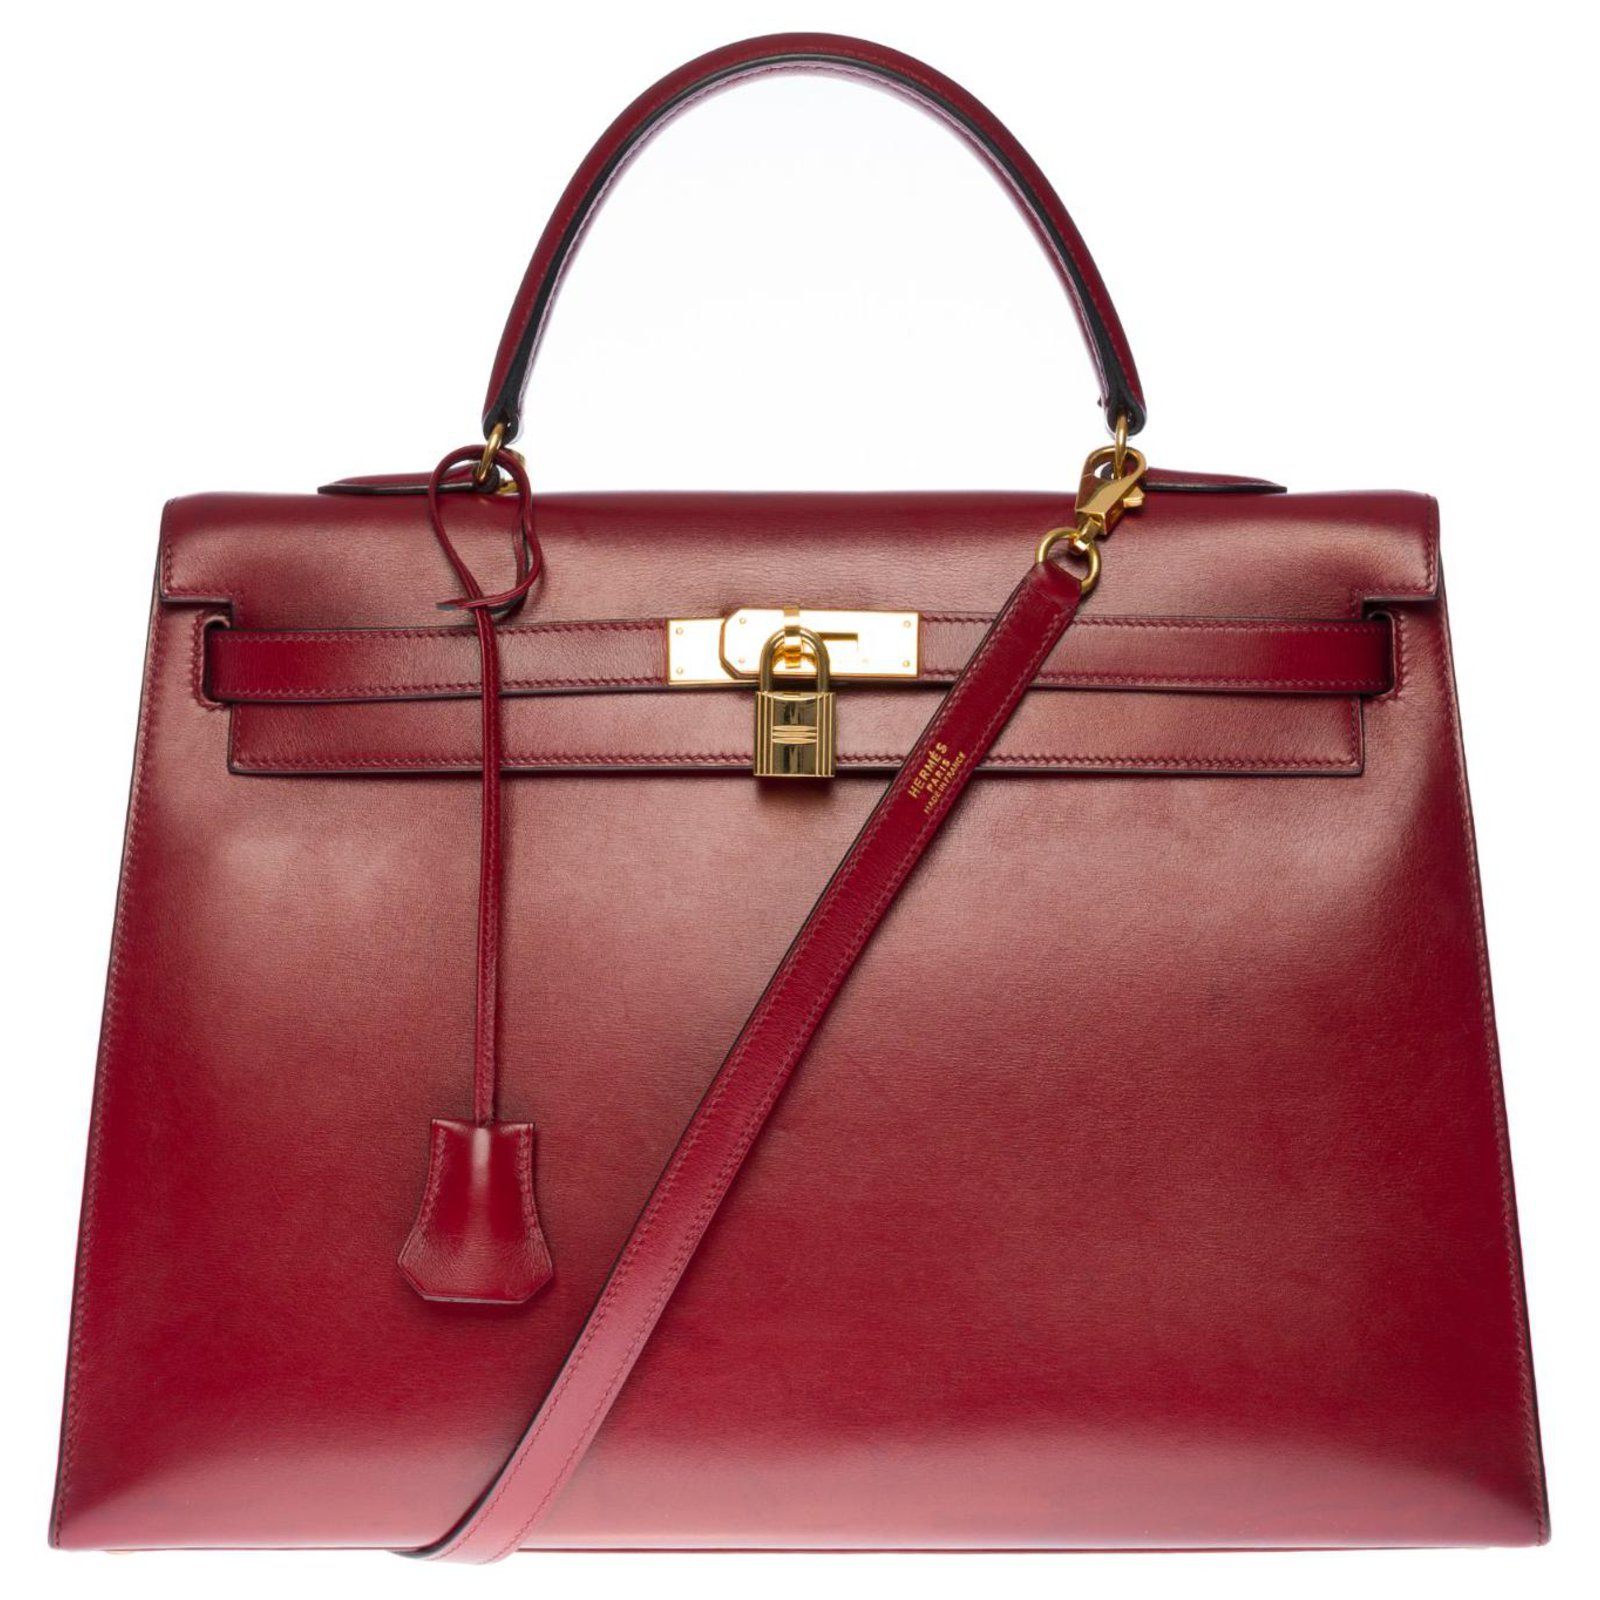 Beautiful Hermès Kelly bag 35 cm shoulder strap in burgundy box